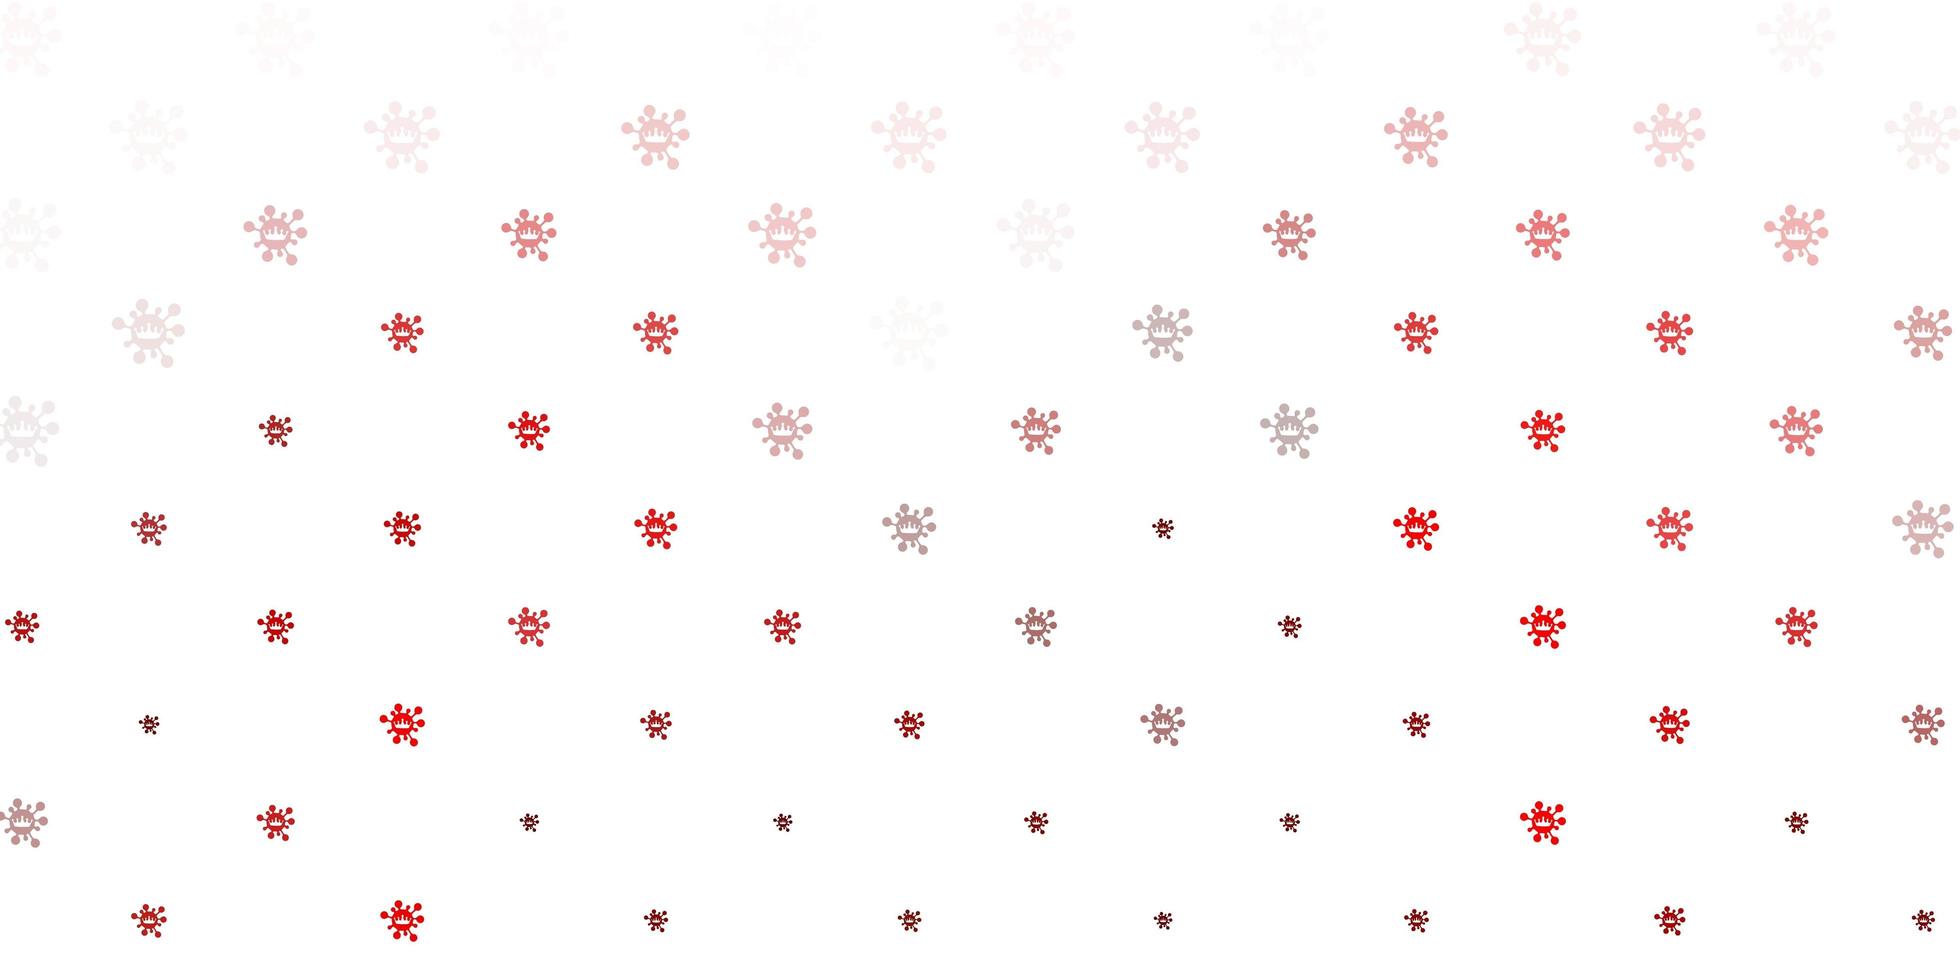 rode virussymbolen op witte achtergrond vector